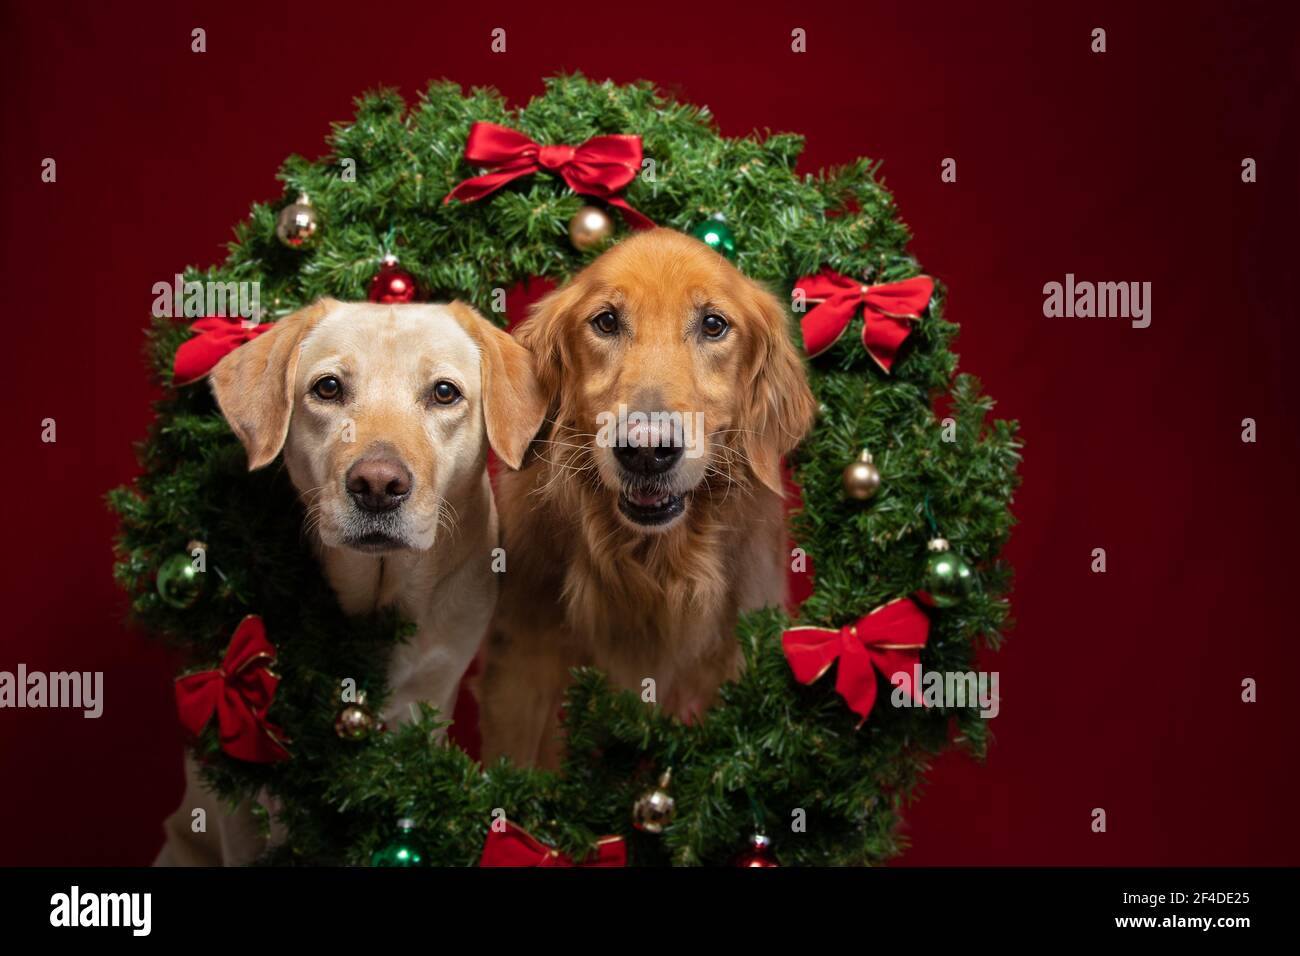 Golden retriever and labrador dogs with a wreath around their necks Stock Photo